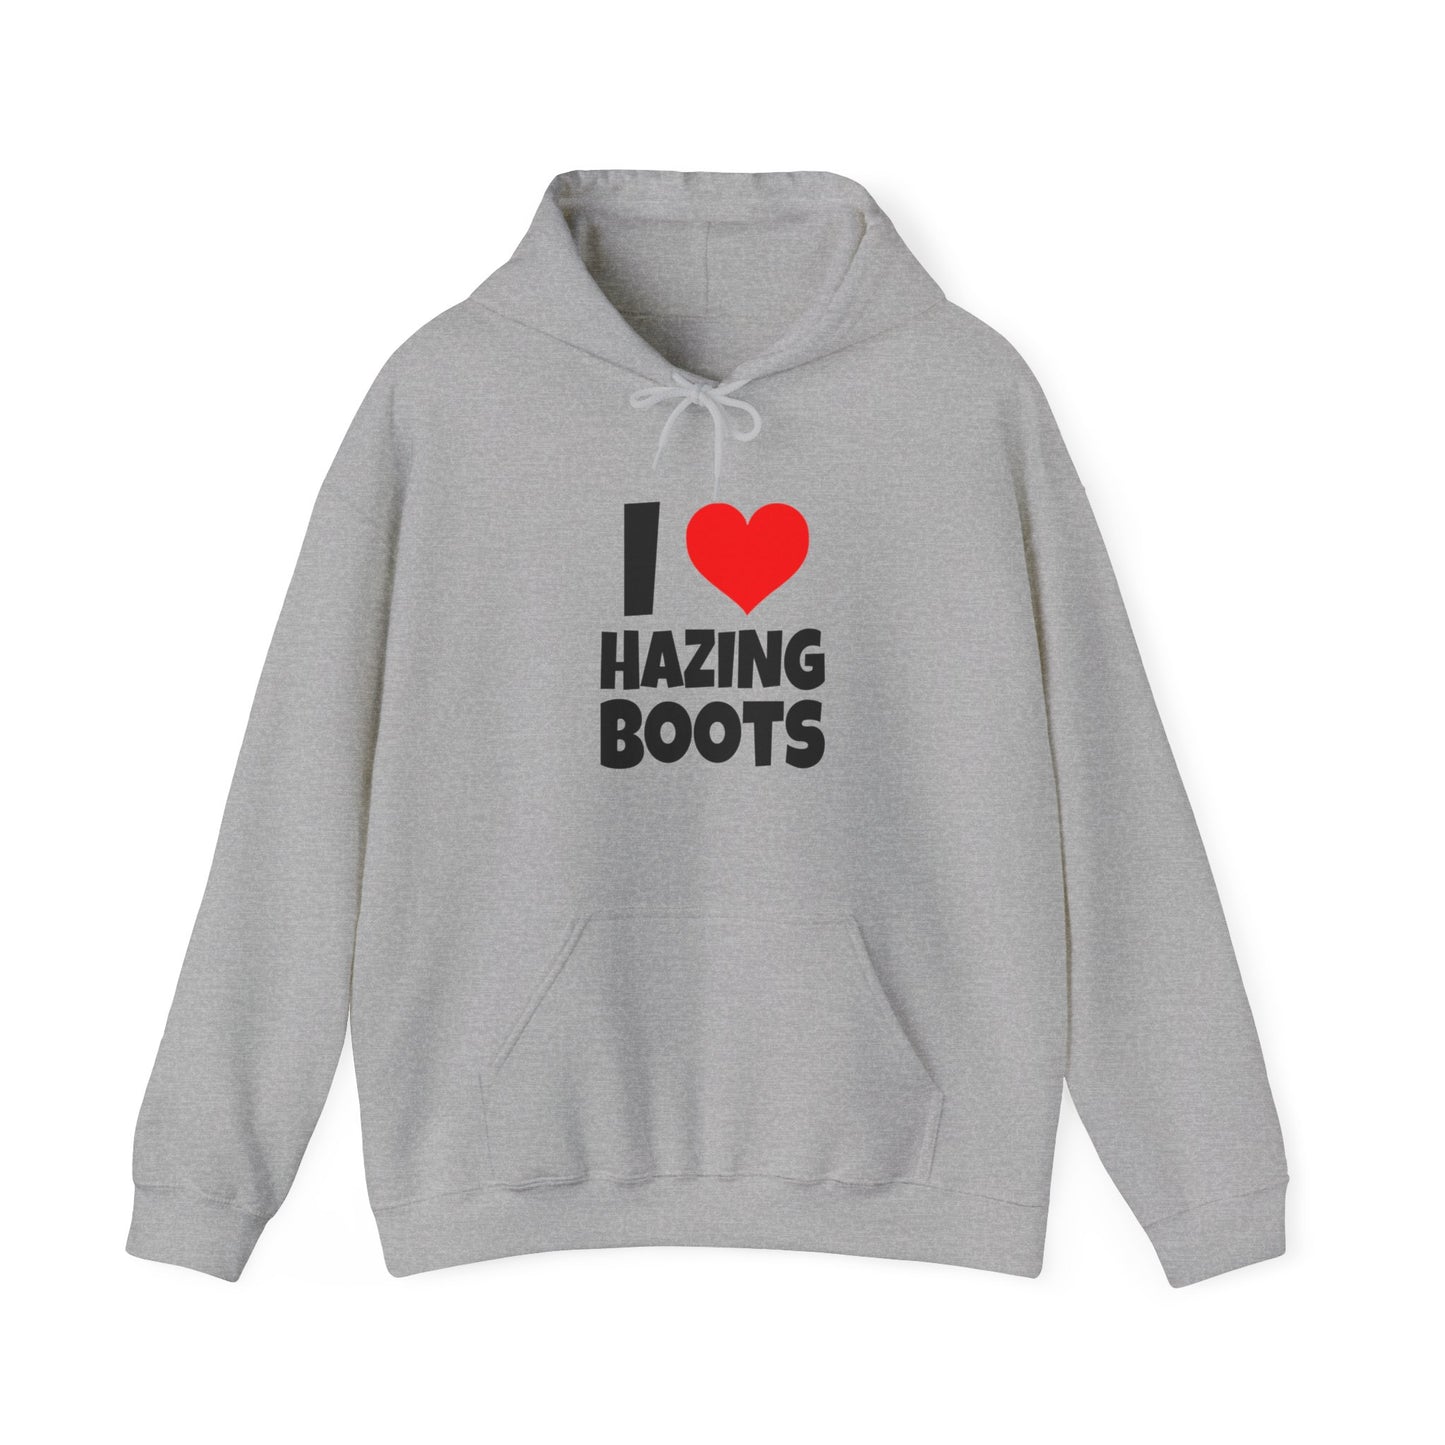 I Love Hazing Boots - Hooded Sweatshirt